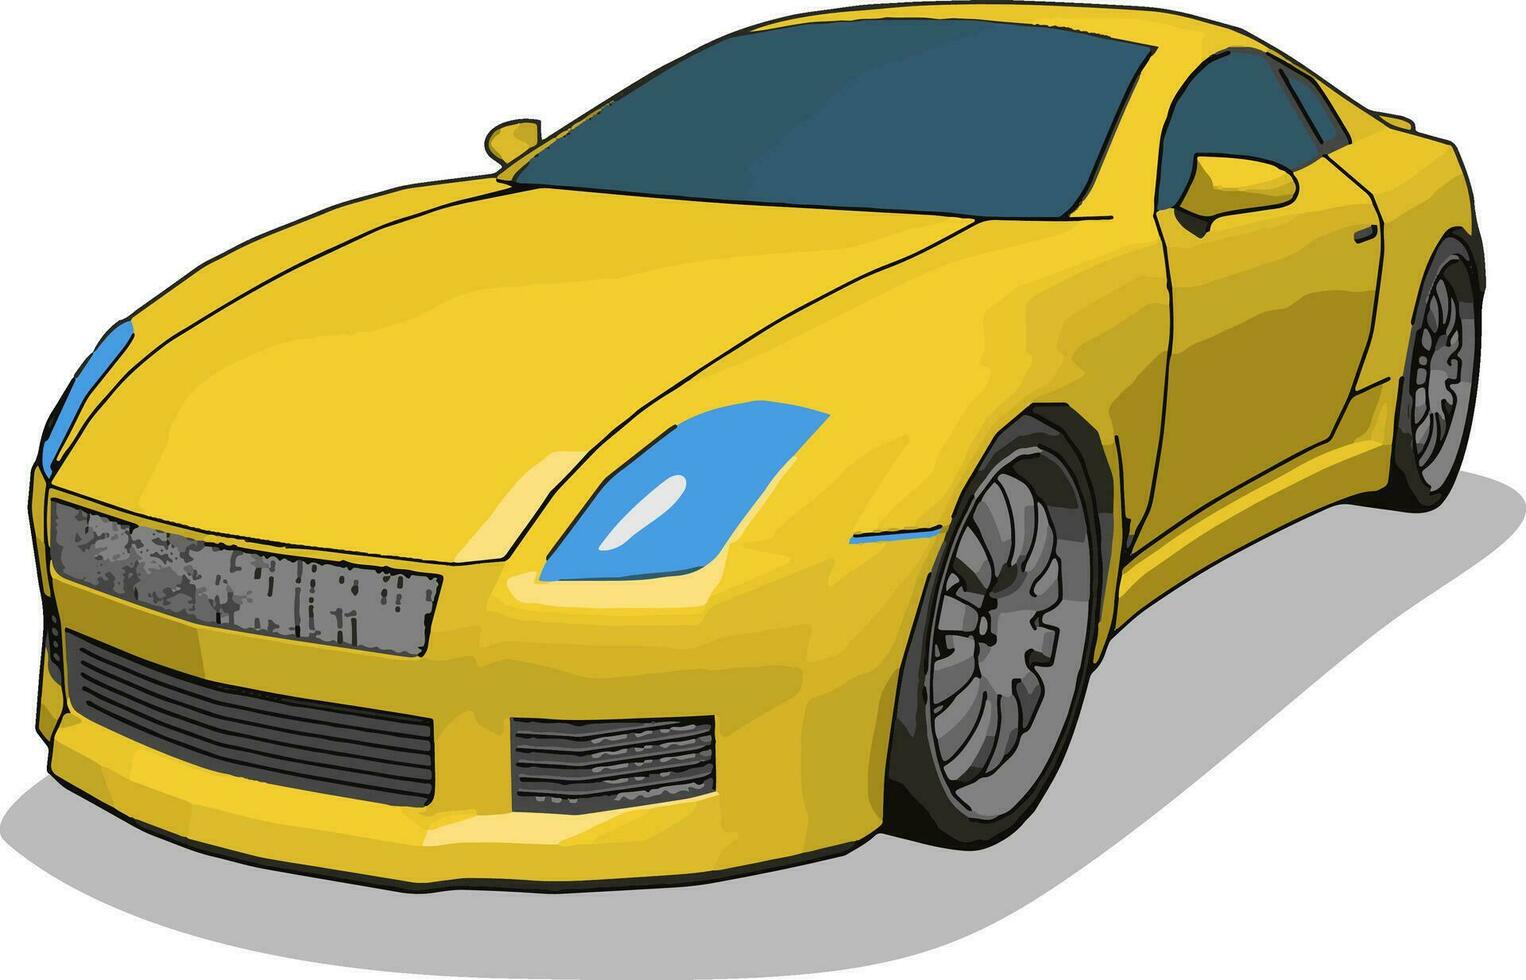 Yellow luxury car, illustration, vector on white background.